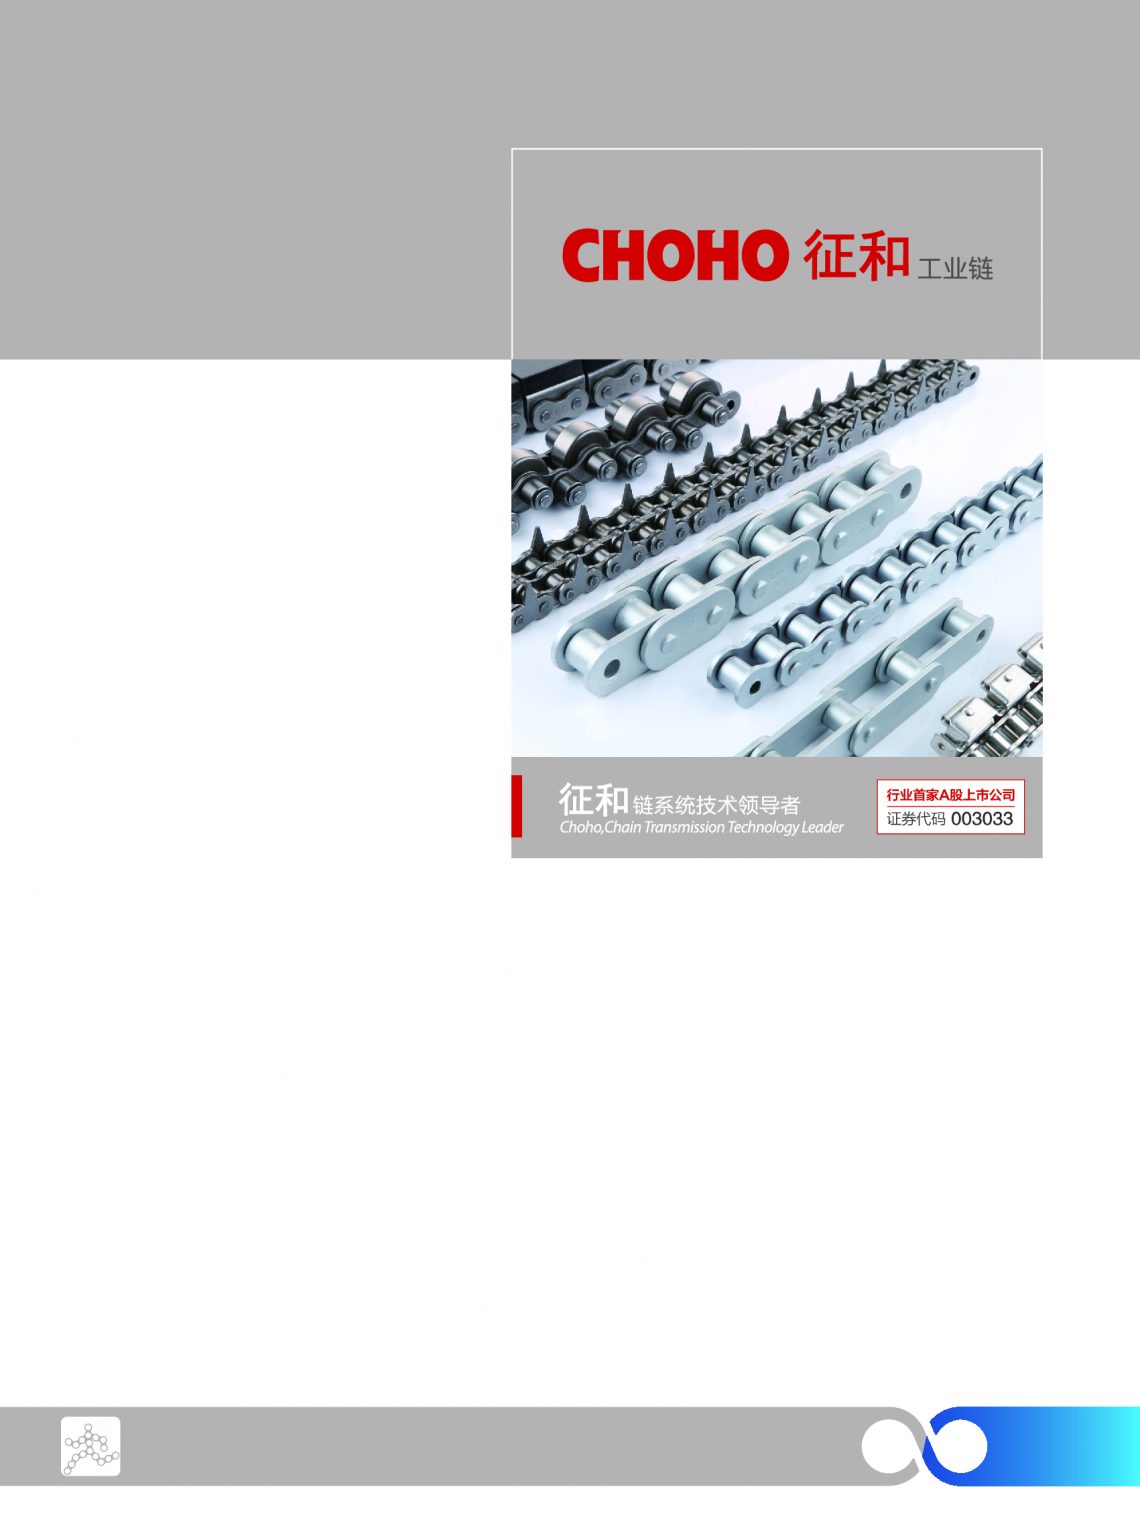 CHOHO Industrial Chain